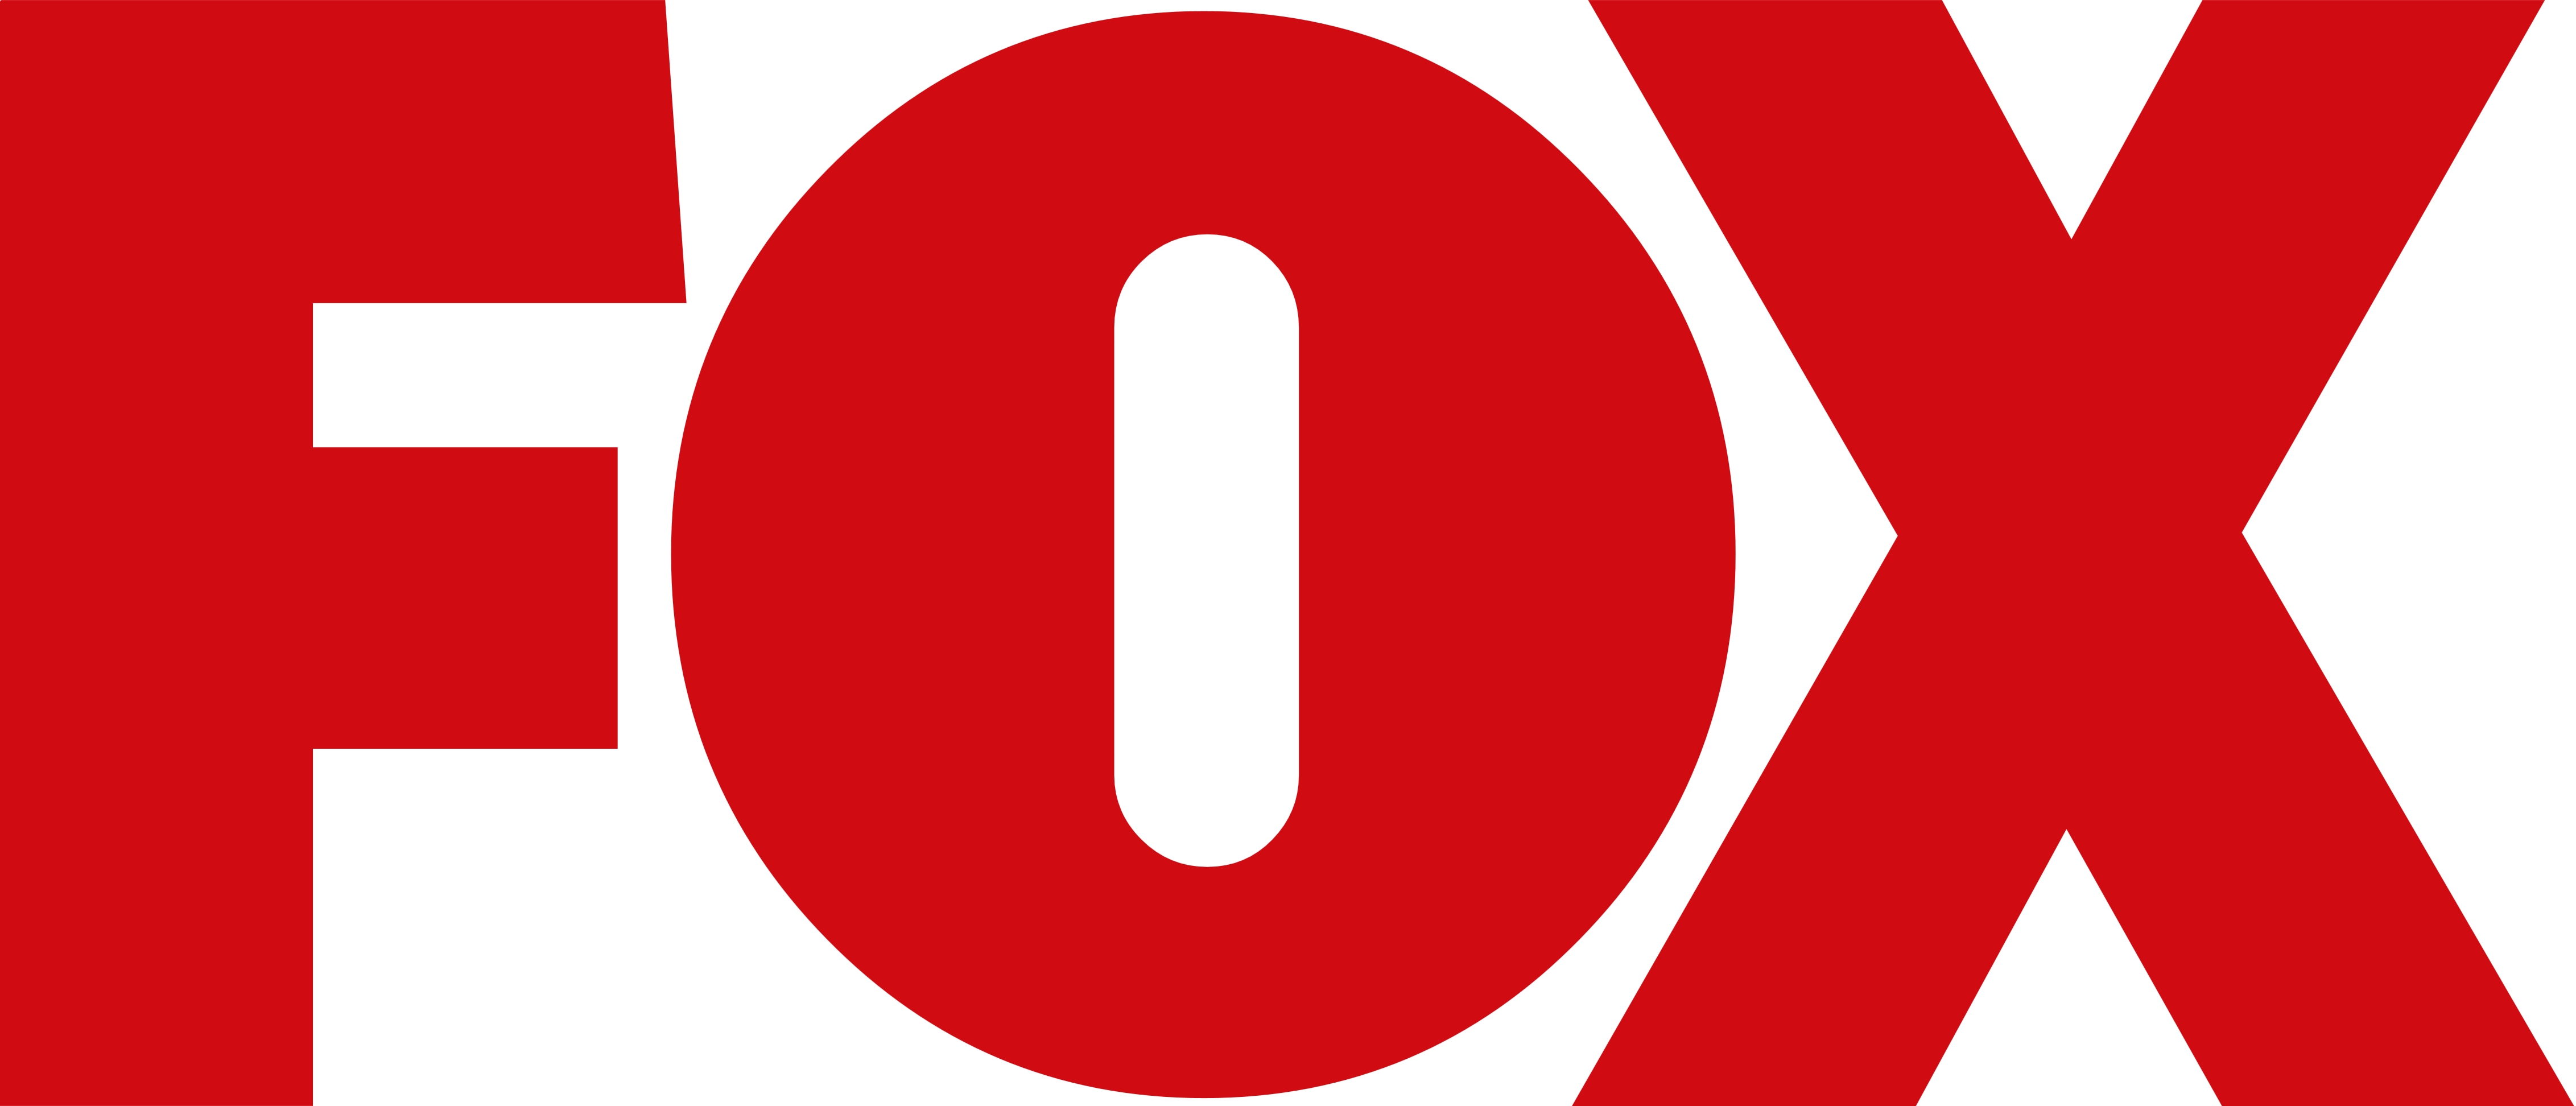 Fox New Logo Png - Image to u